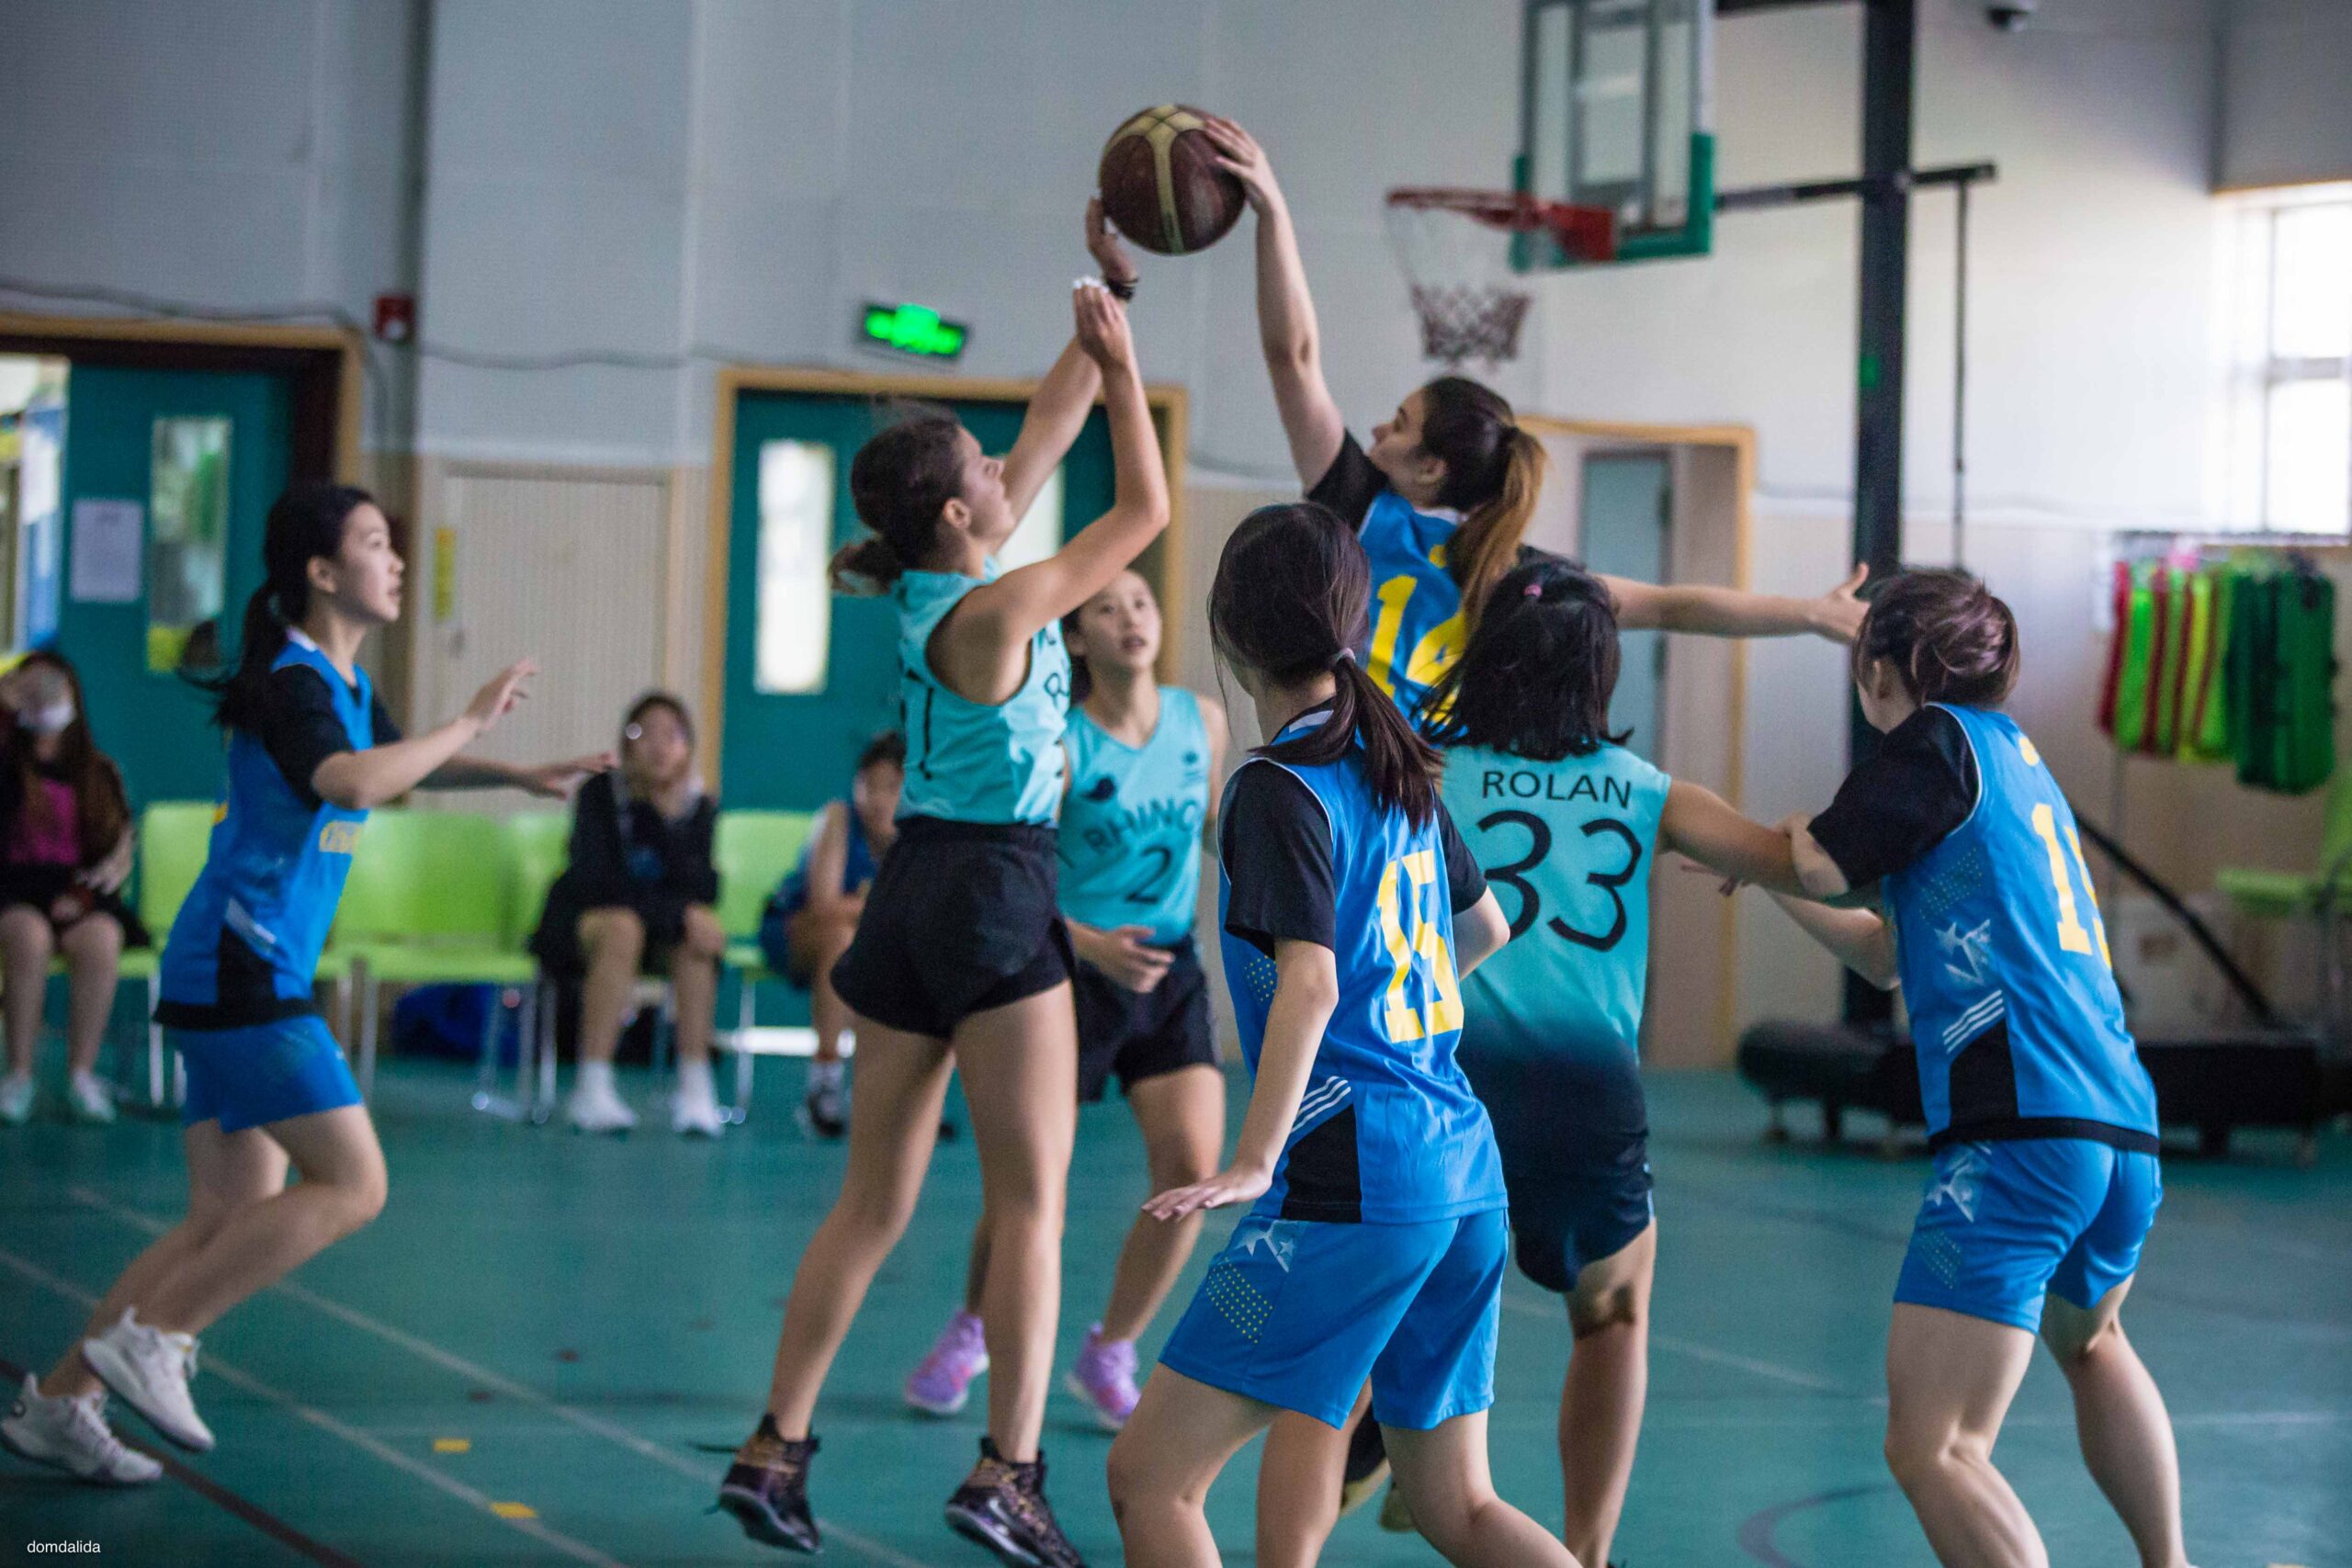 Girls basketball team at Clifford International School in Guangzhou, Panyu, China